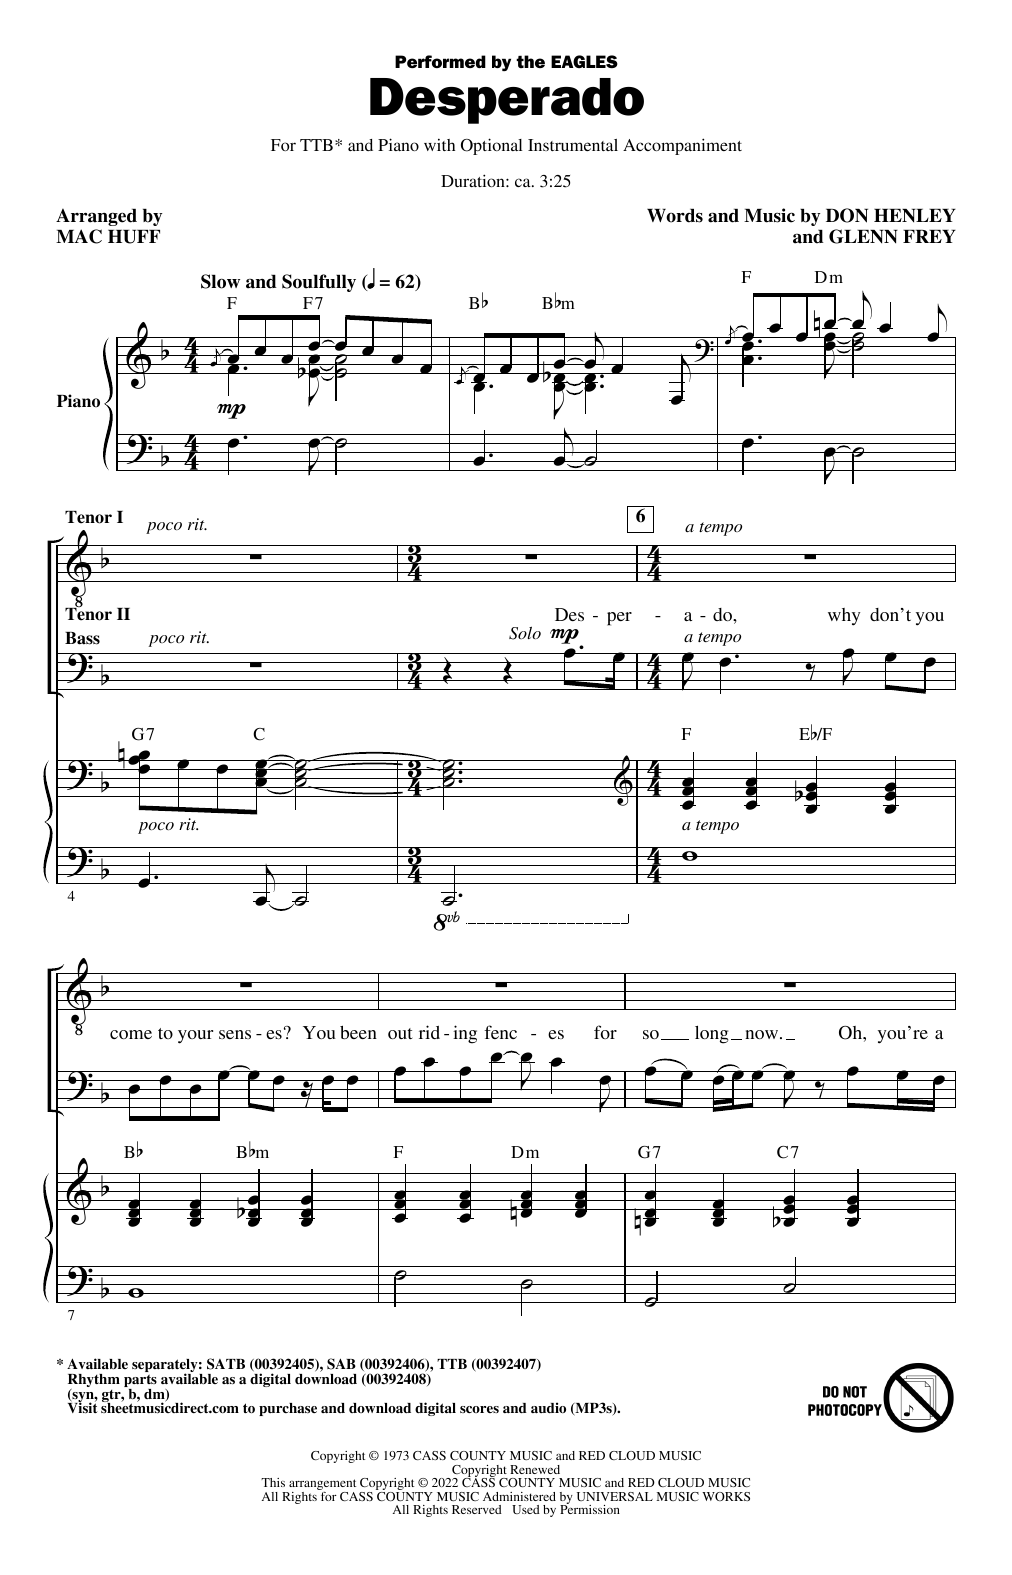 Eagles Desperado (arr. Mac Huff) Sheet Music Notes & Chords for SAB Choir - Download or Print PDF